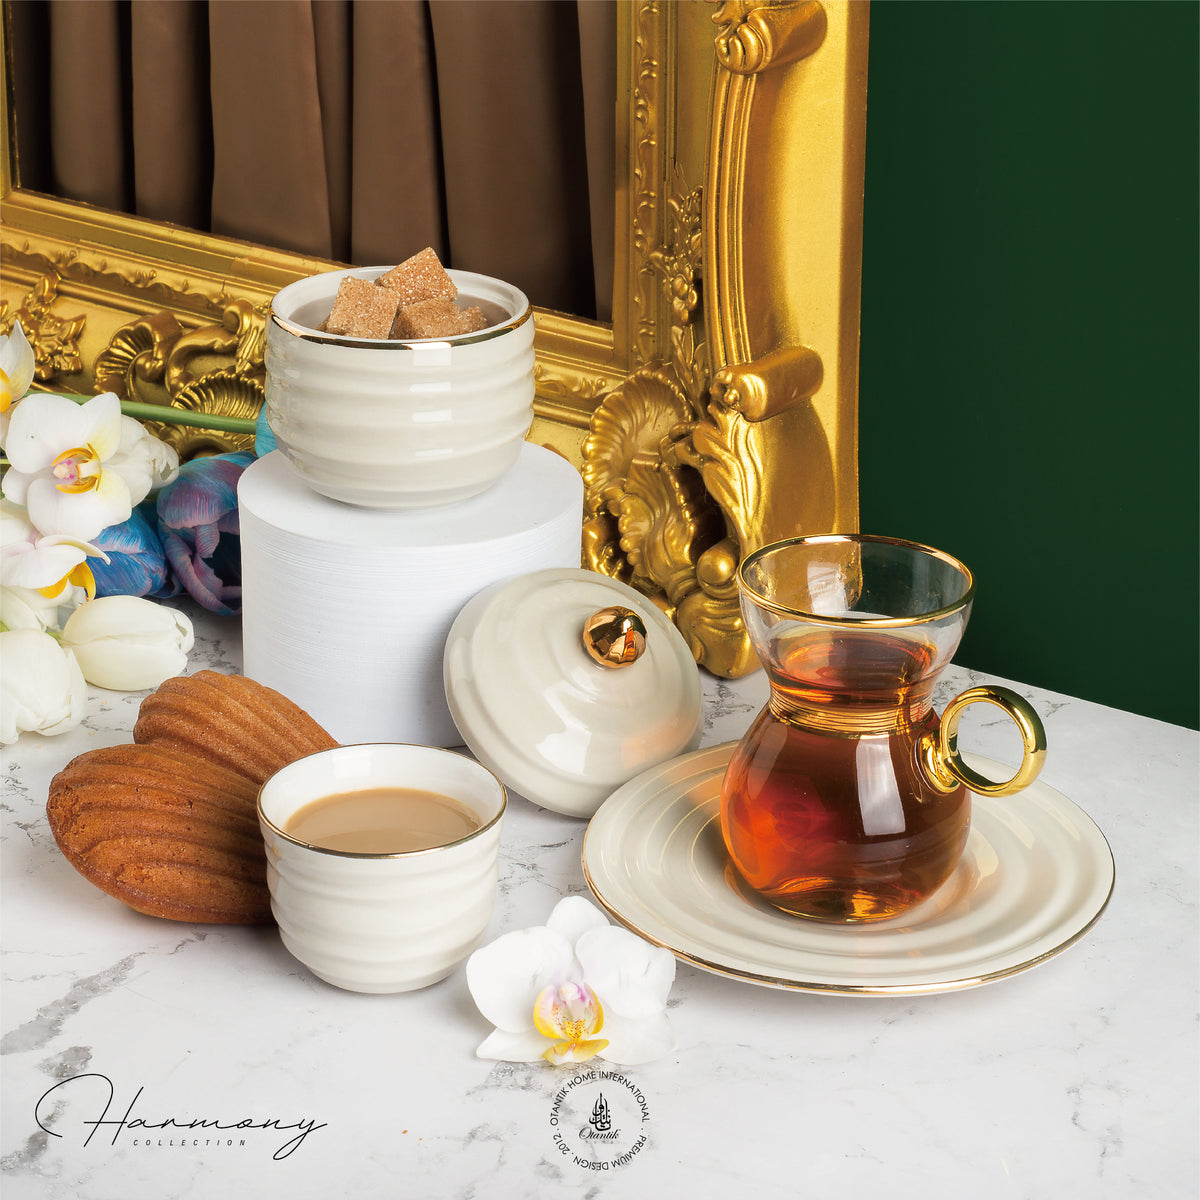 Harmony - Round Tea and Coffee